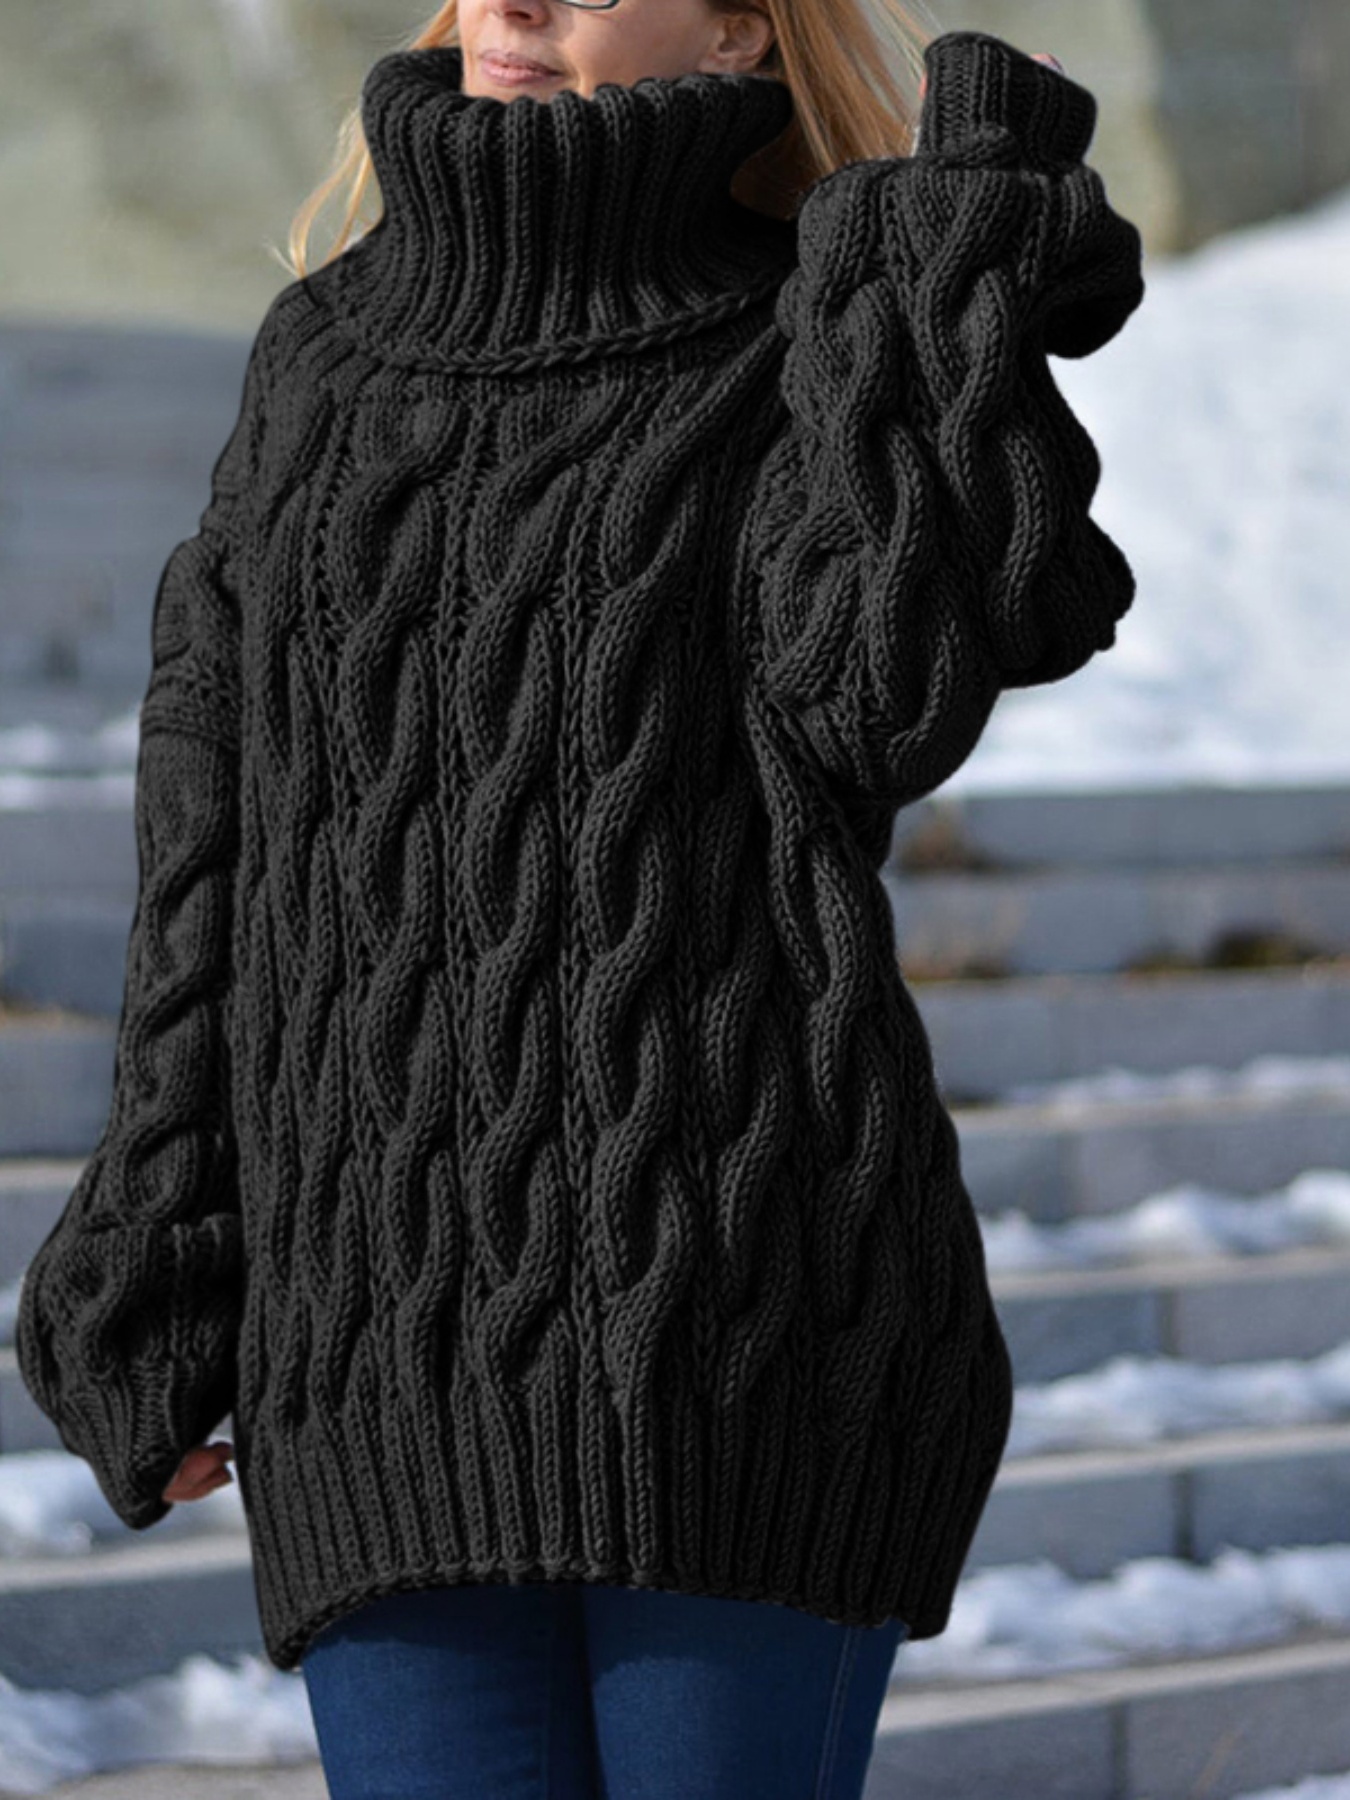  Suéter de mujer Otoño Invierno Ropa Cuello Alto Cálido